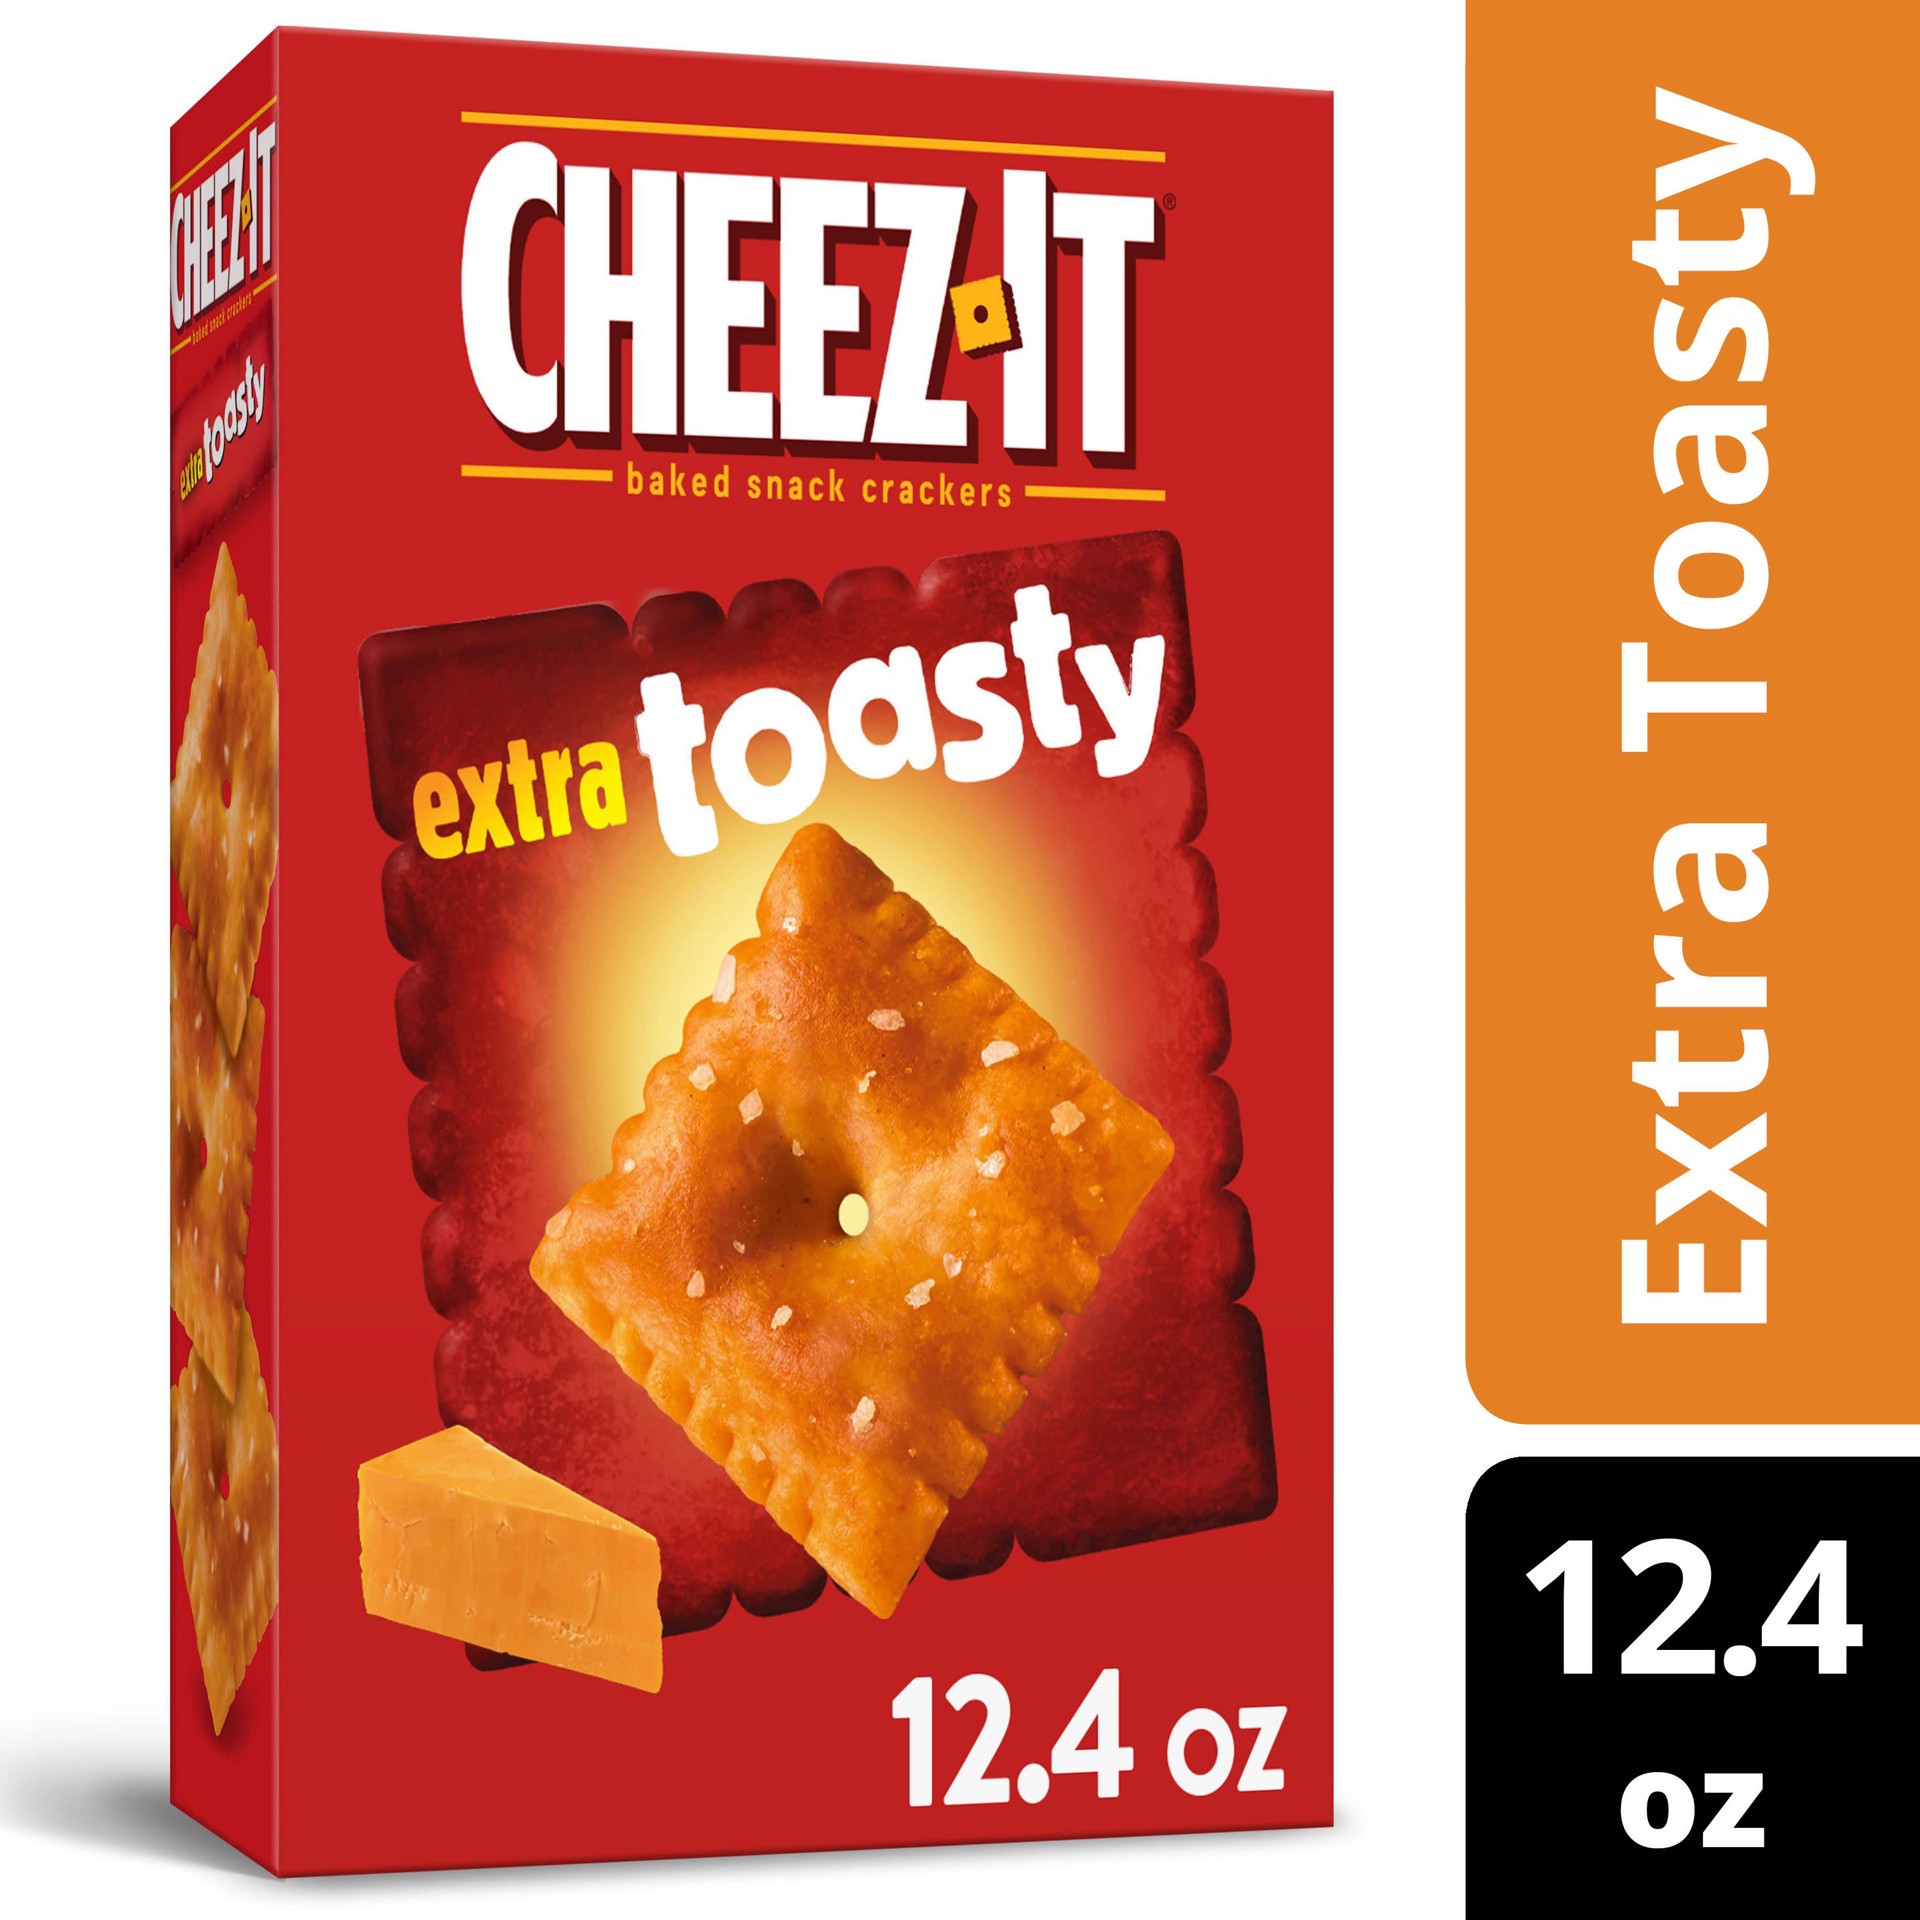 slide 1 of 8, Cheez-It Extra Toasty Baked Snack Crackers - 12.4oz, 12.4 oz